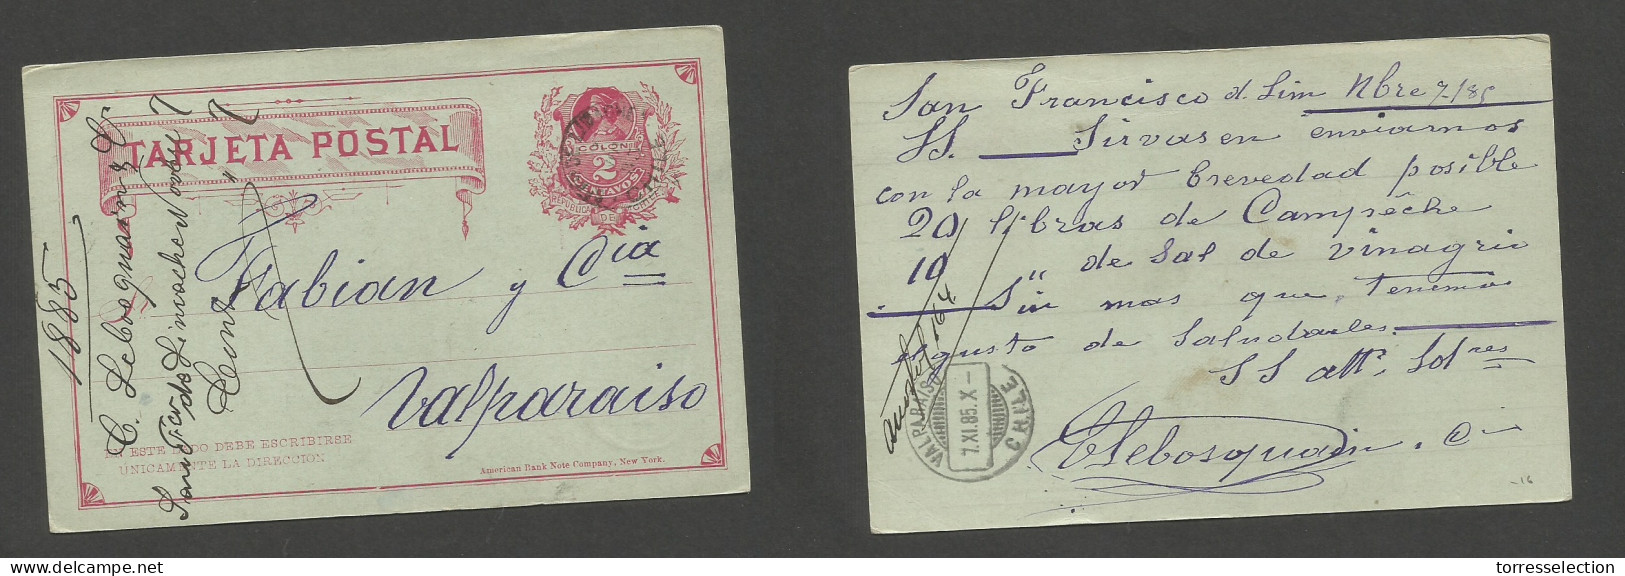 CHILE - Stationery. 1885 (7 Nov) San Francisco De Limache - Valp (7 Nov) Fine Early Stat Card Usage 2c Red / Greenish +  - Chili